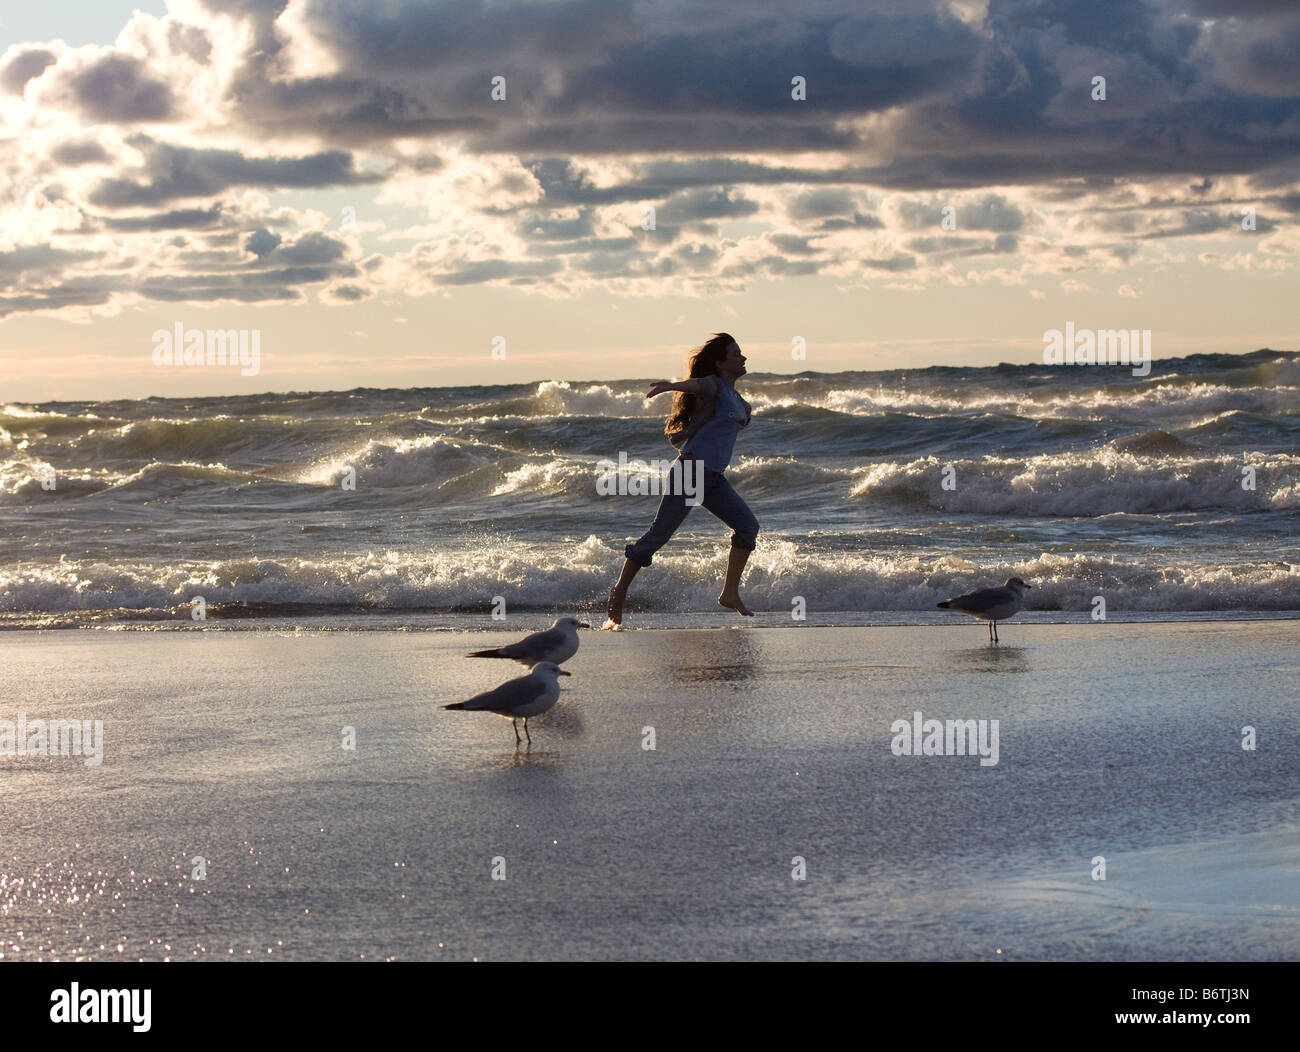 Girl running on beach near shore with seagulls Stock Photo